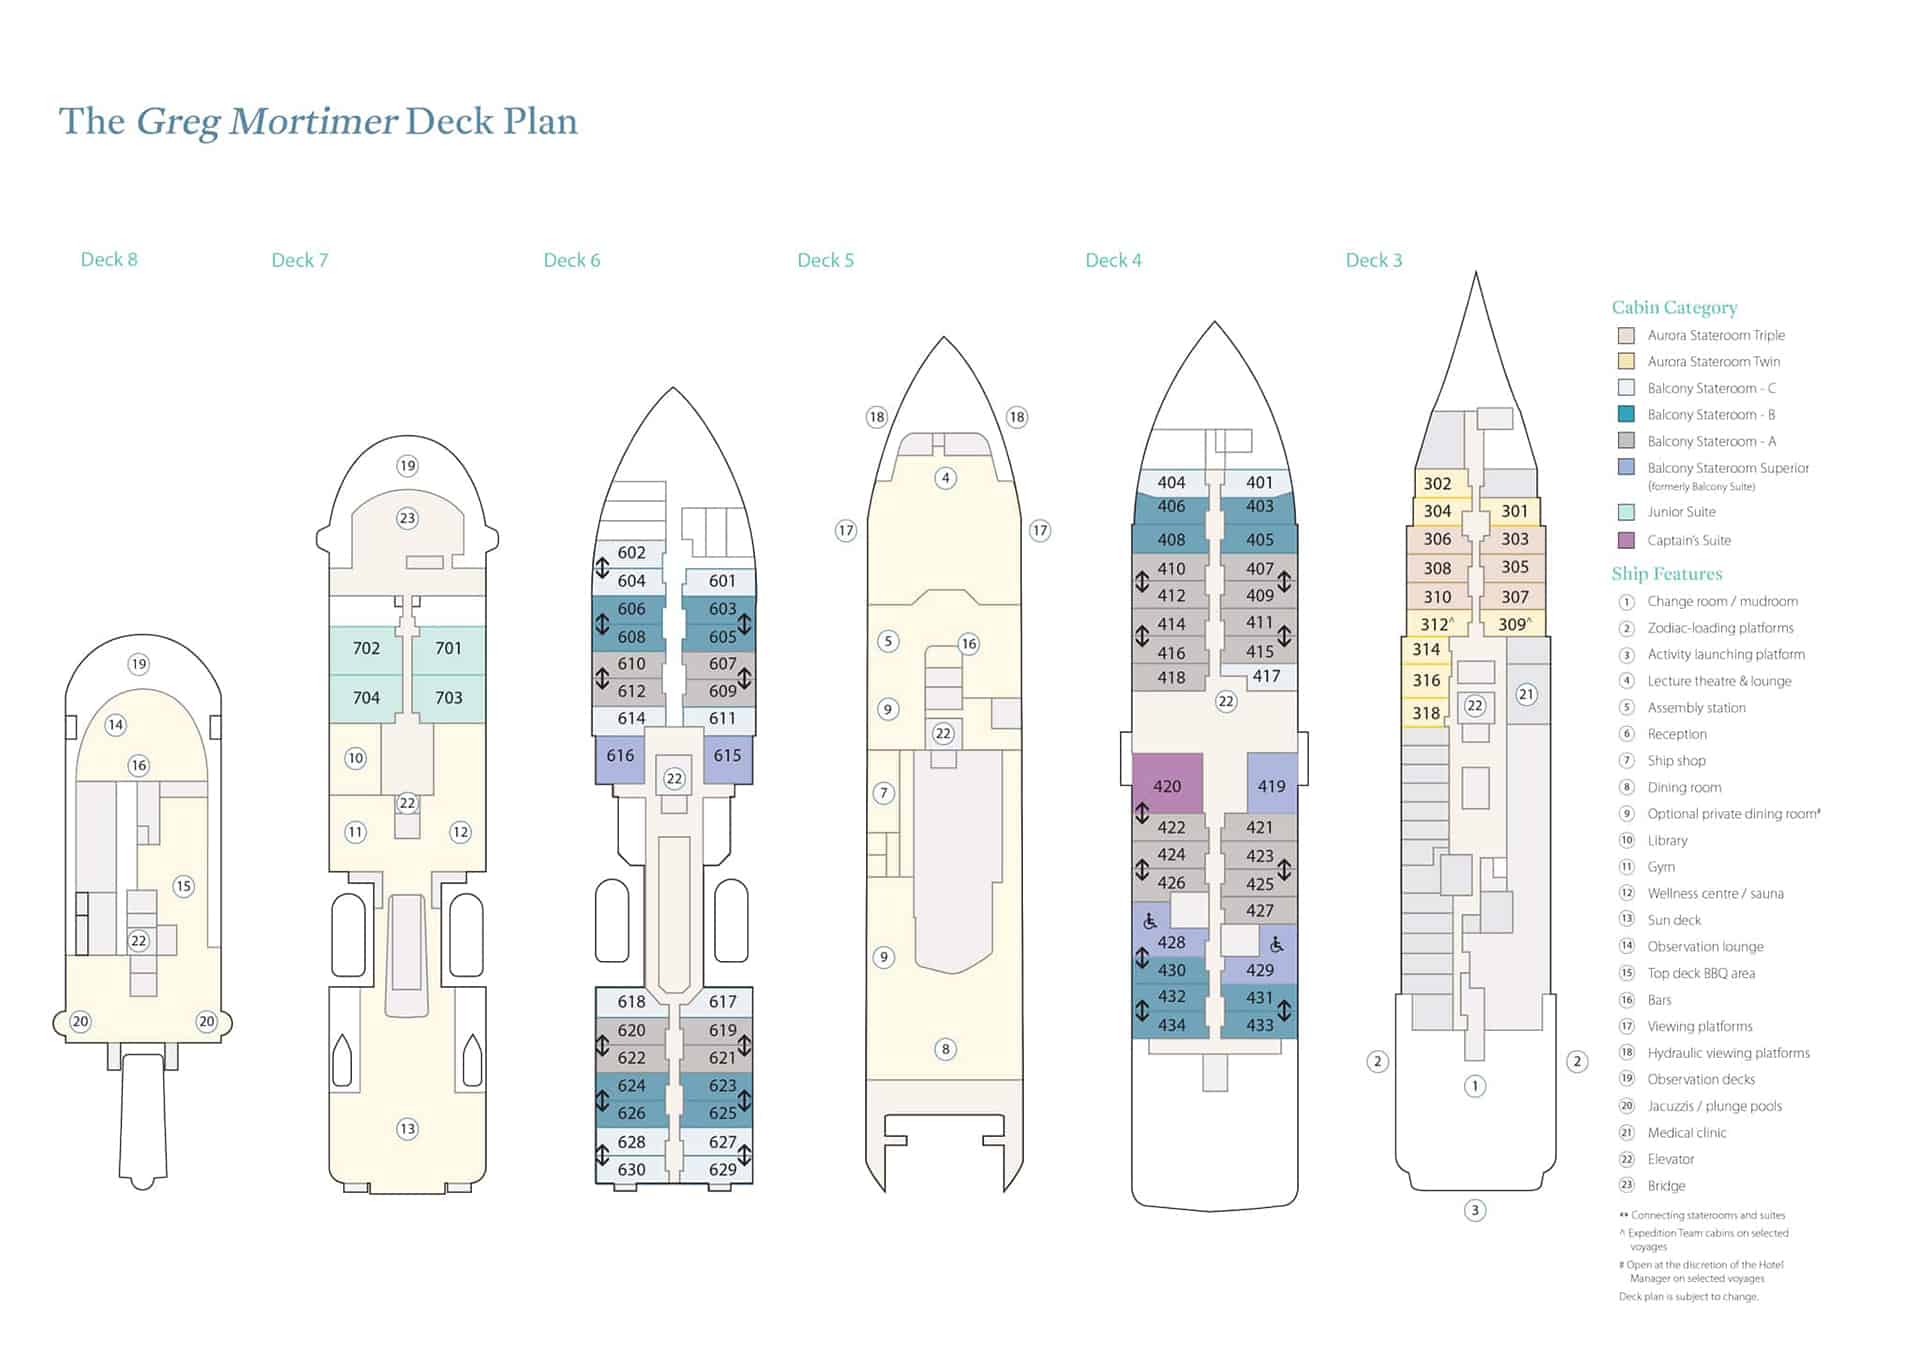 Deck plan of Greg Mortimer polar expedition ship, showing 77 cabins across Decks 3, 4, 6 & 7.